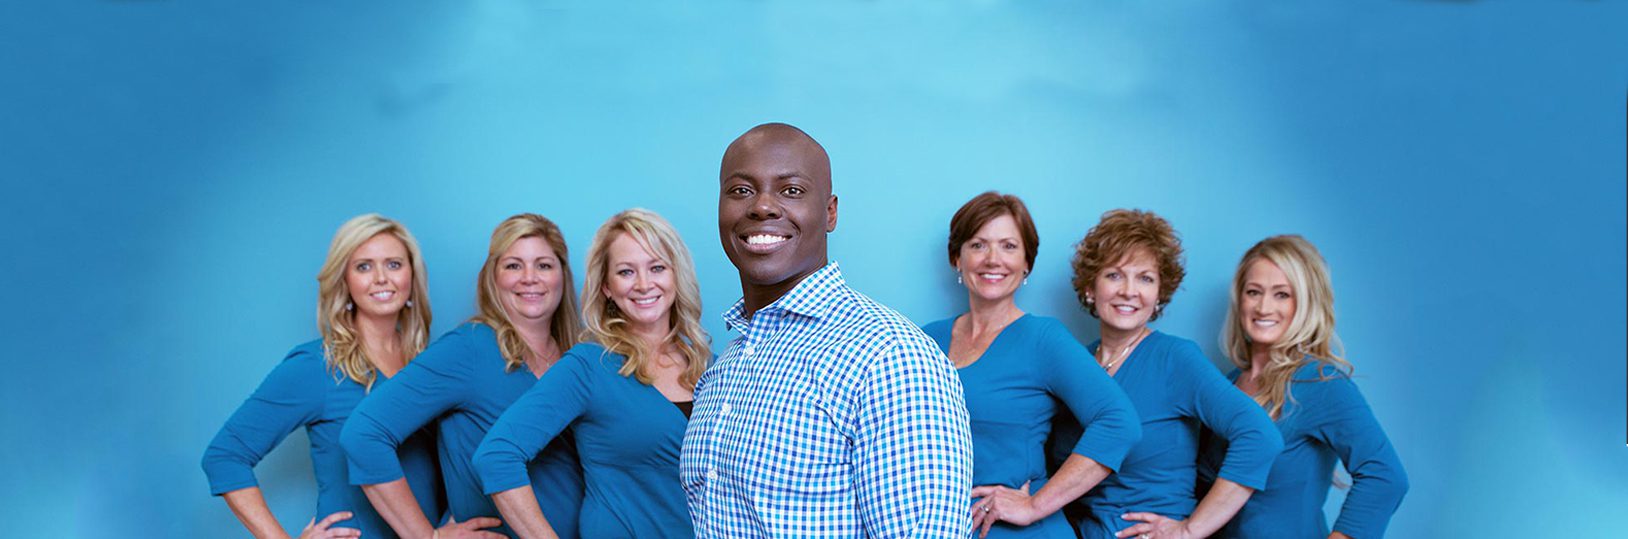 Jackson Orthodontics - Dr. Jackson with his team